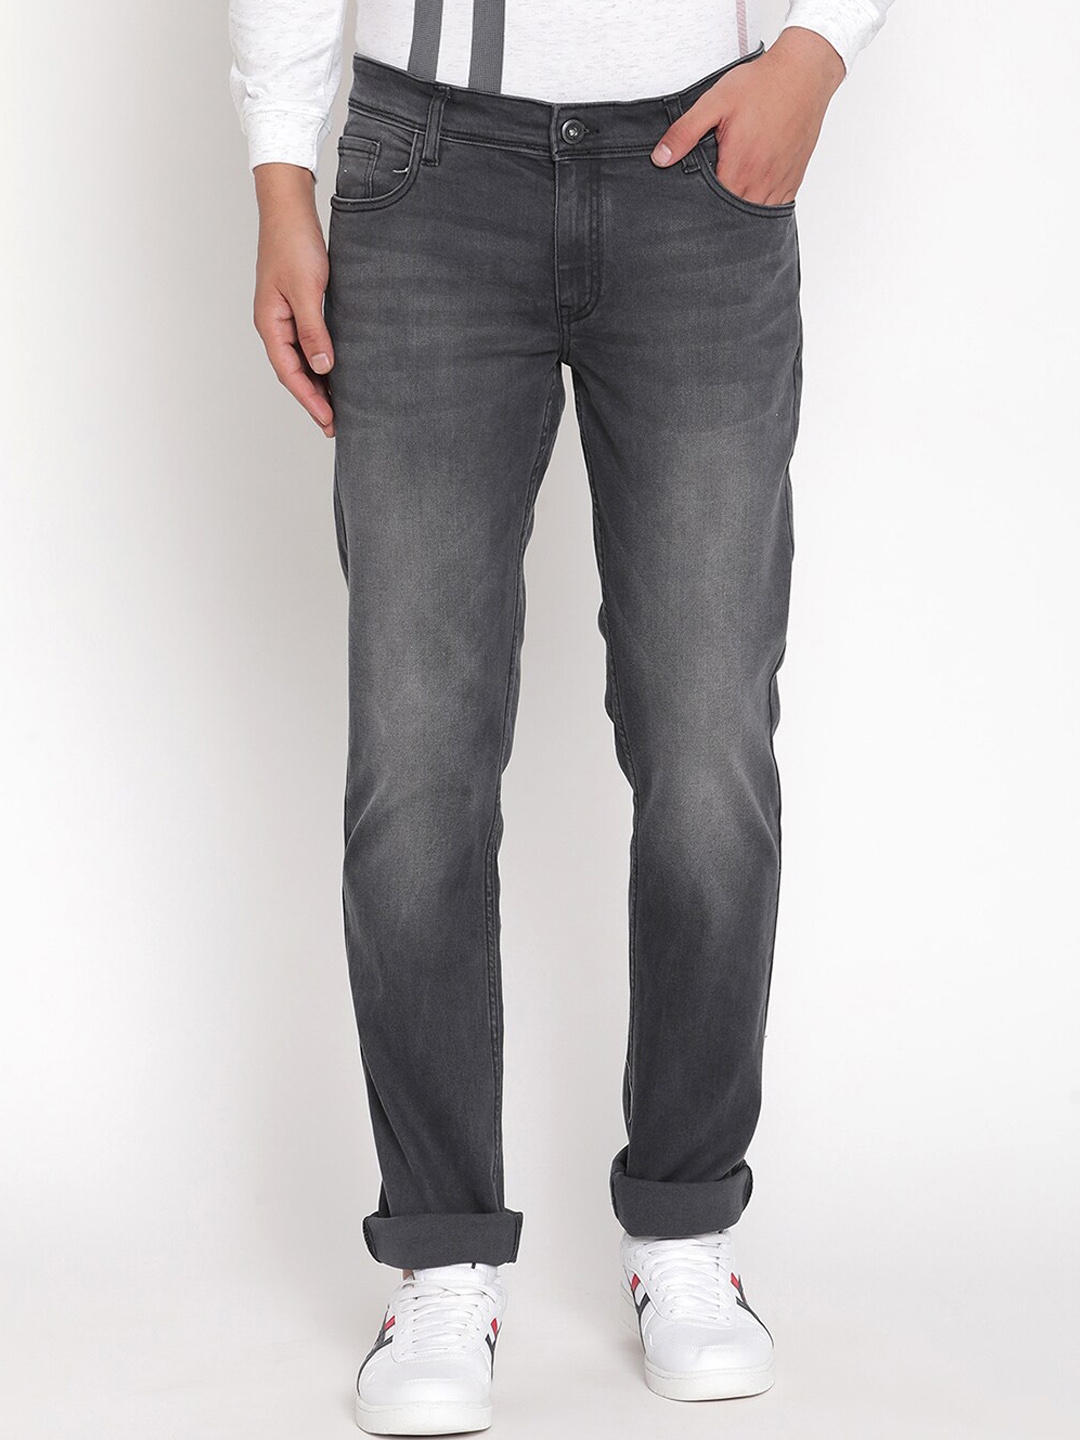 Buy Octave Men Charcoal Grey Light Fade Jeans - Jeans for Men 15289936 ...